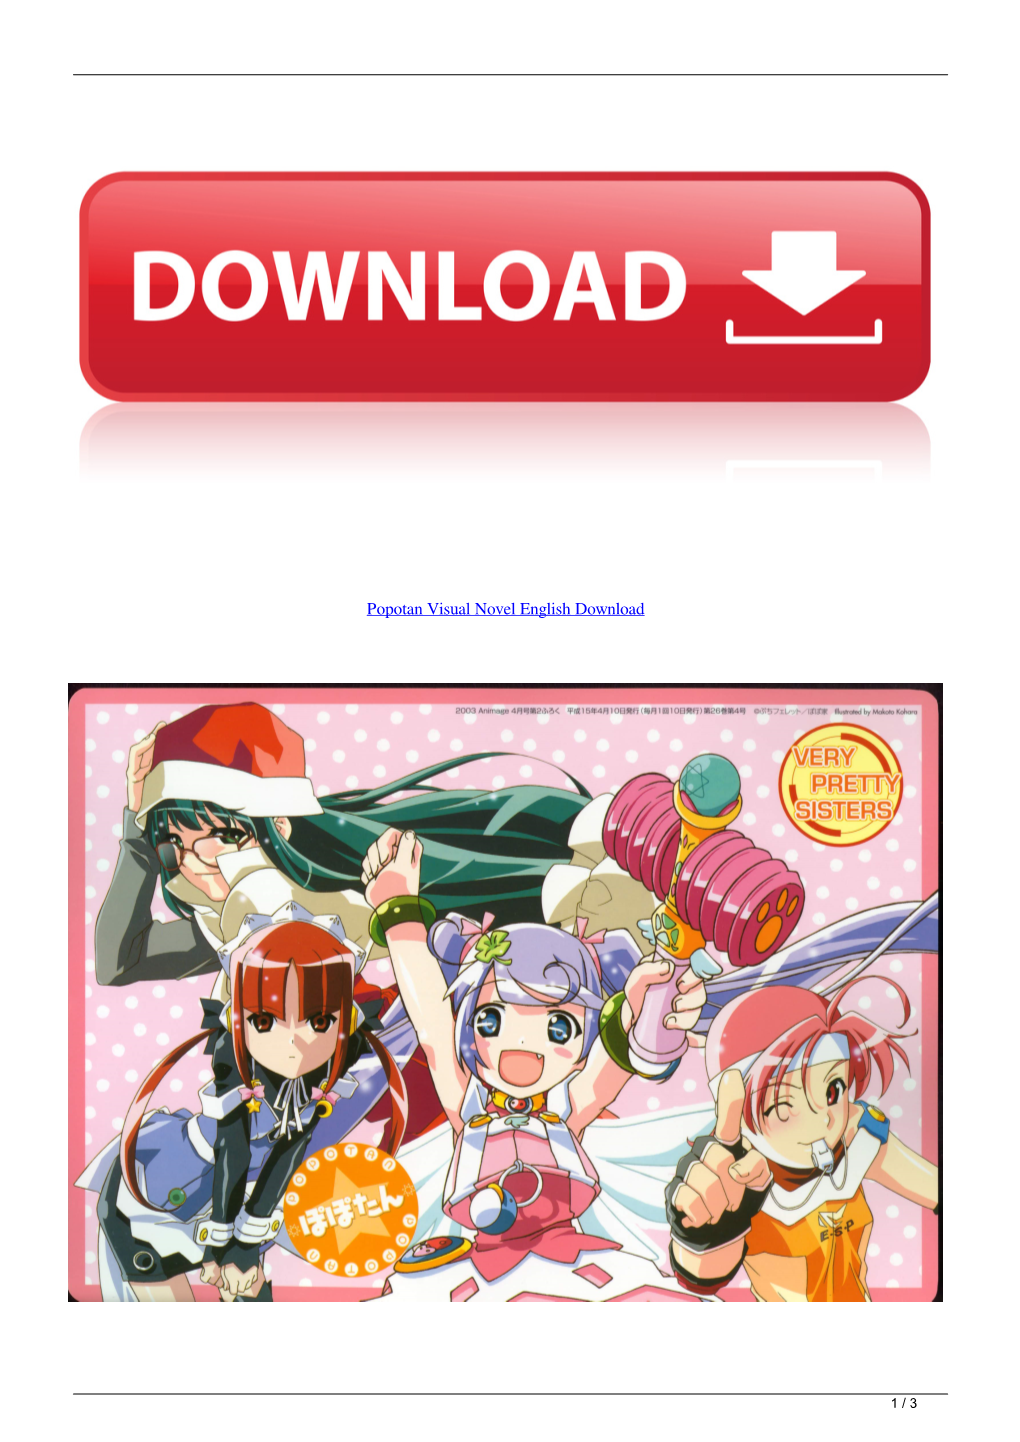 Popotan Visual Novel English Download